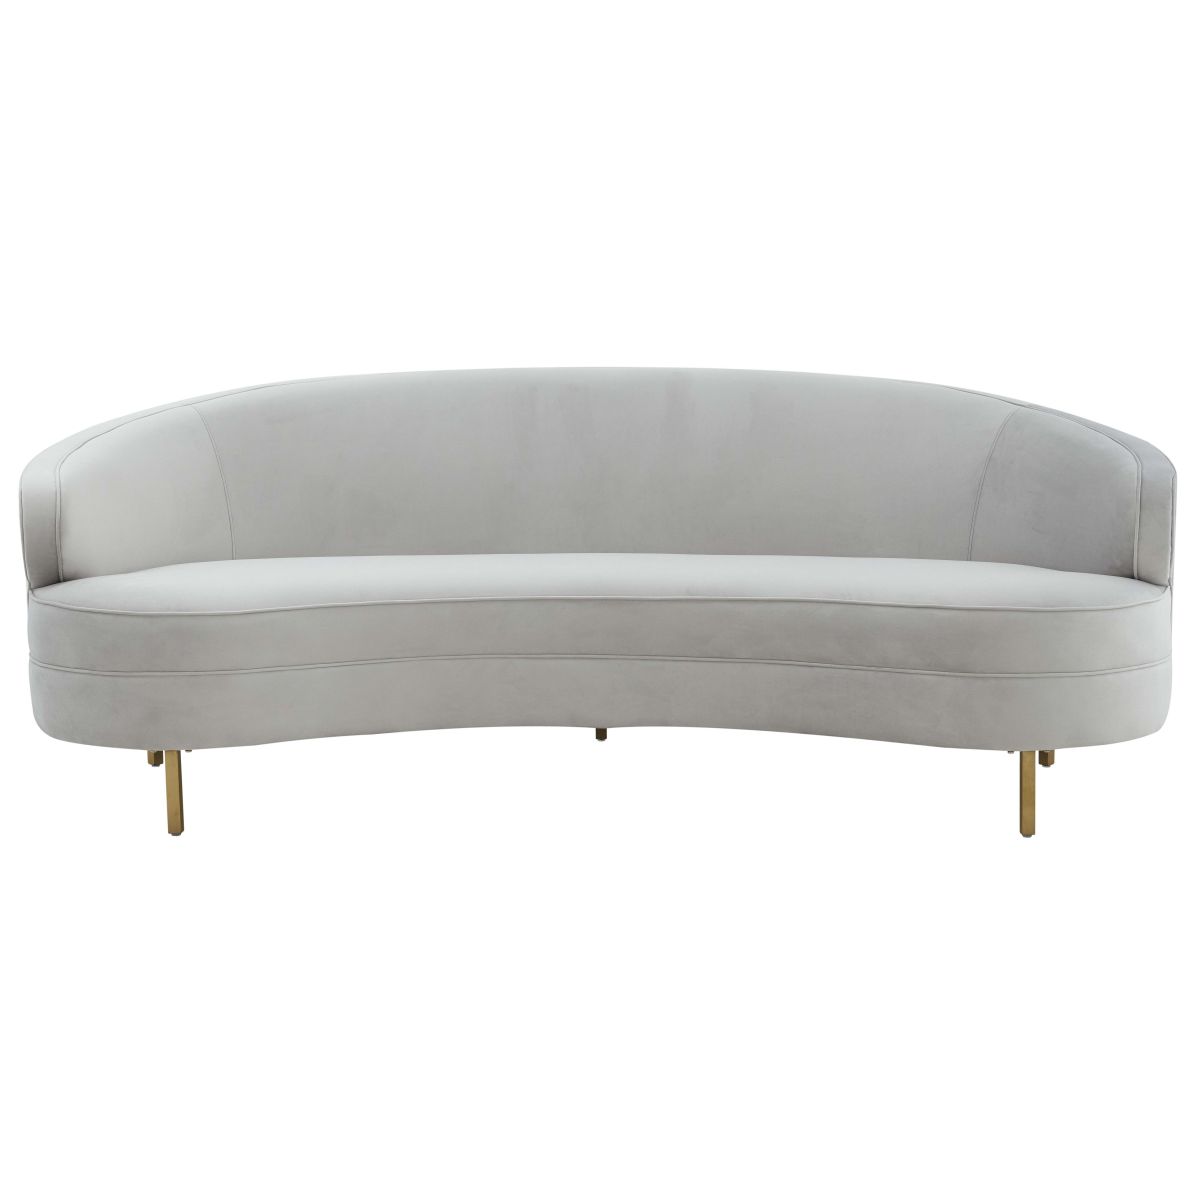 Safavieh Couture Primrose Curved Sofa - Light Grey / Gold